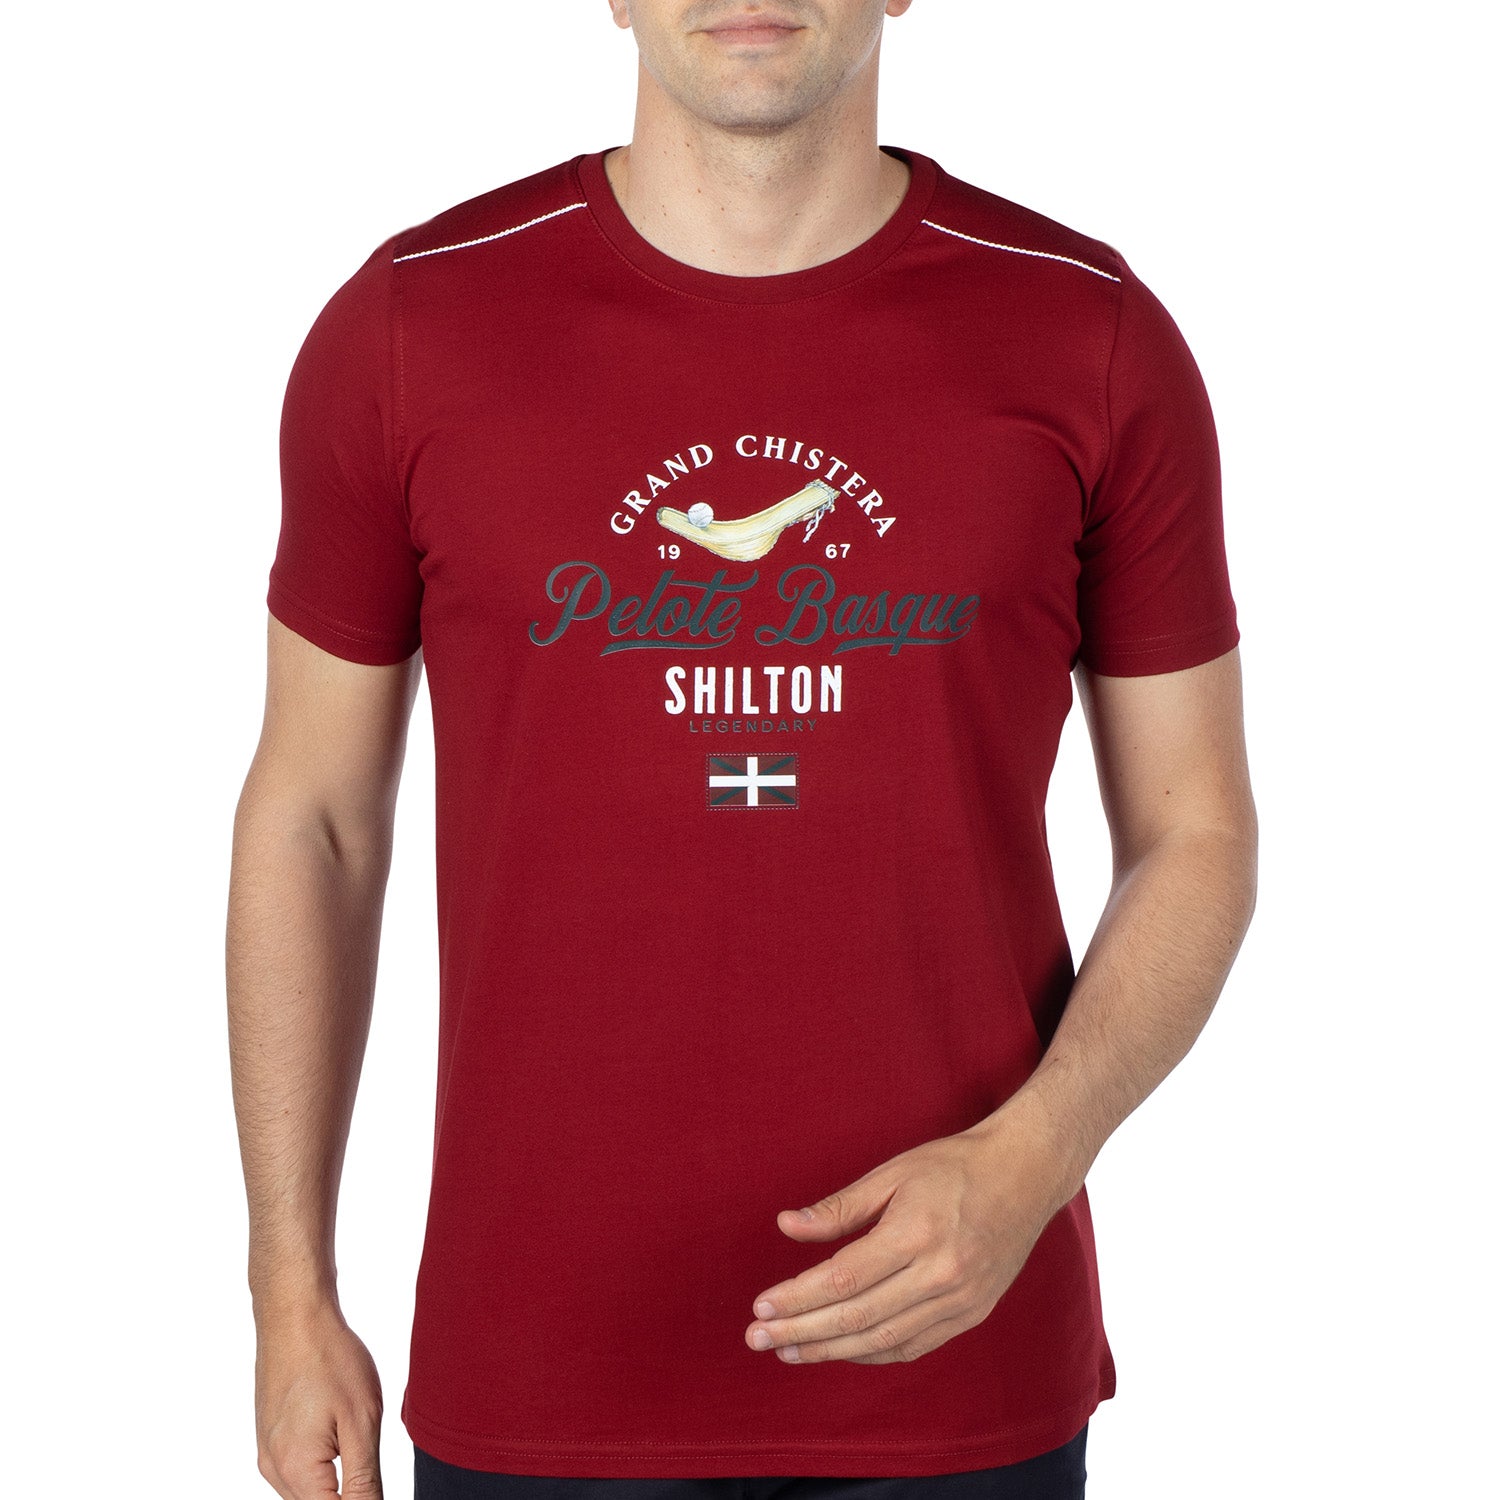 T-shirt pelote basque